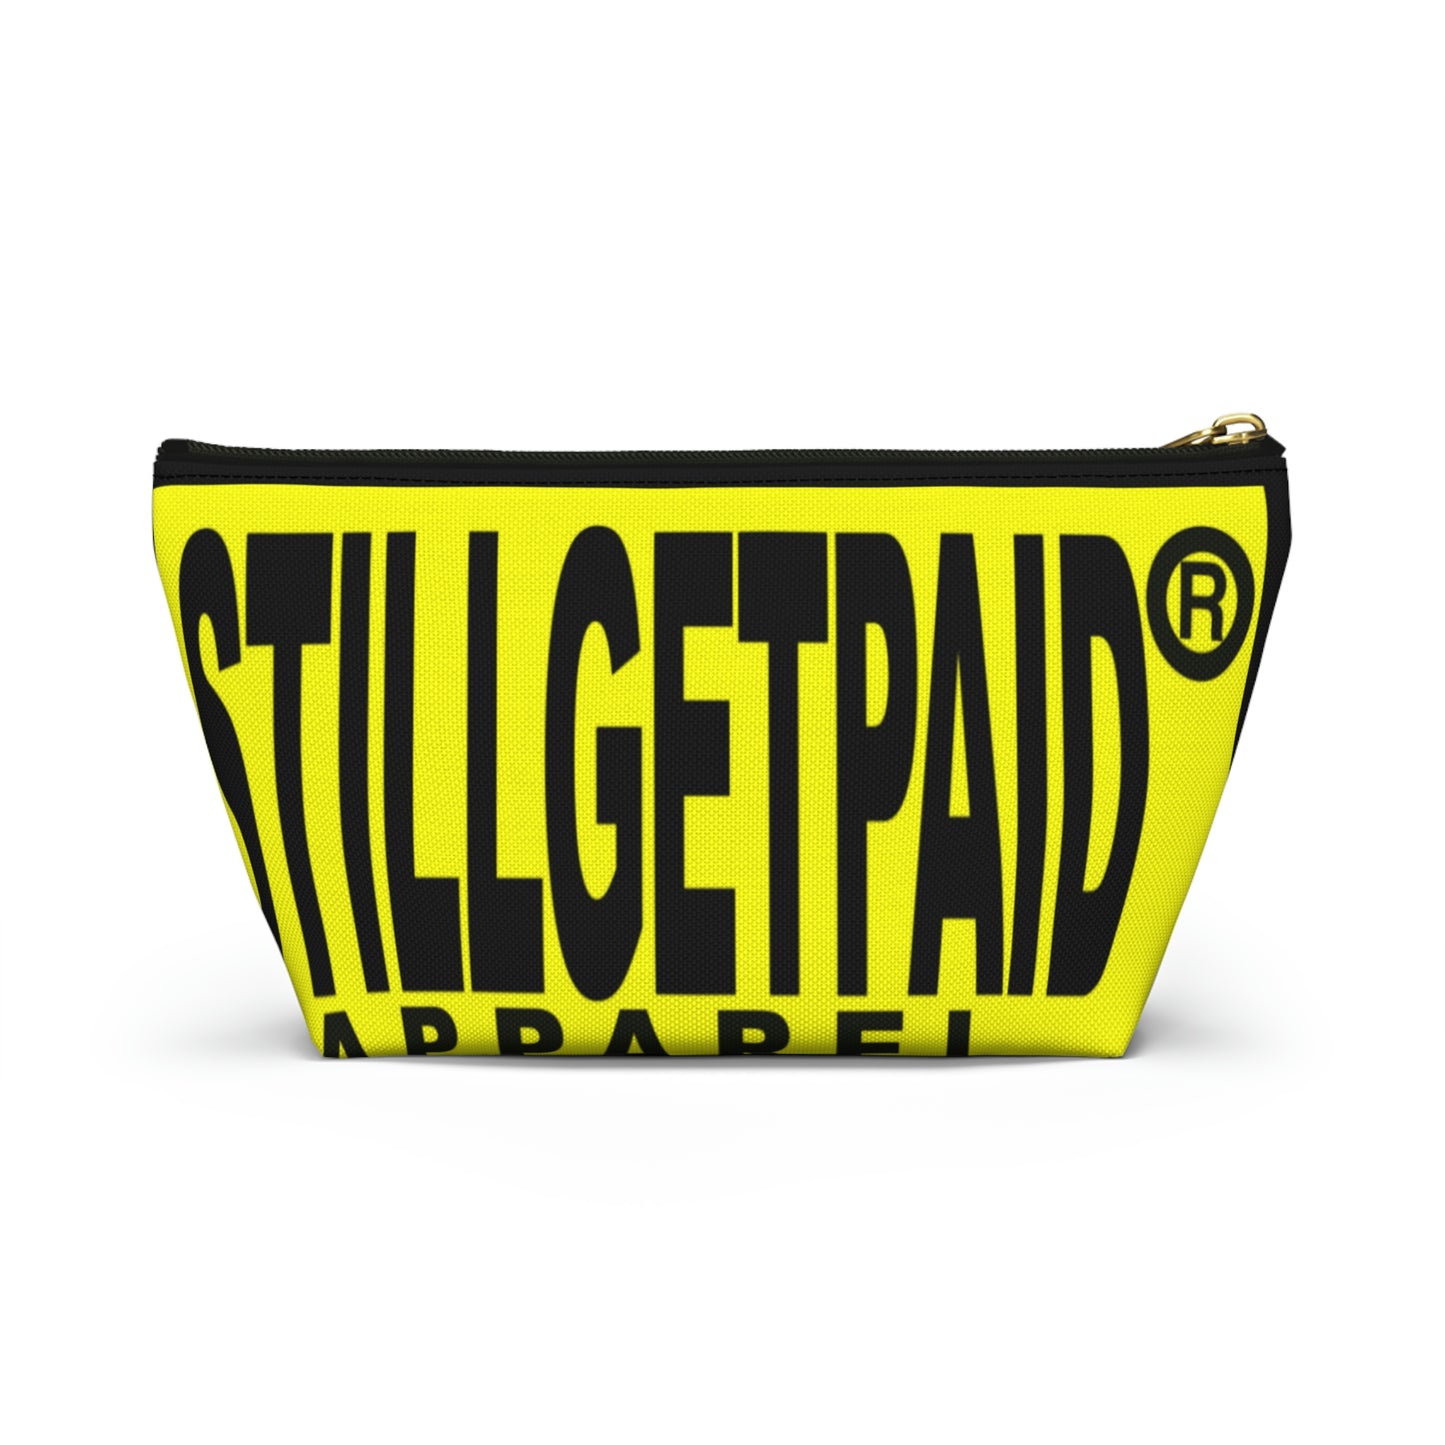 STILLGETPAID® APPAREL Accessory Pouch w T-bottom